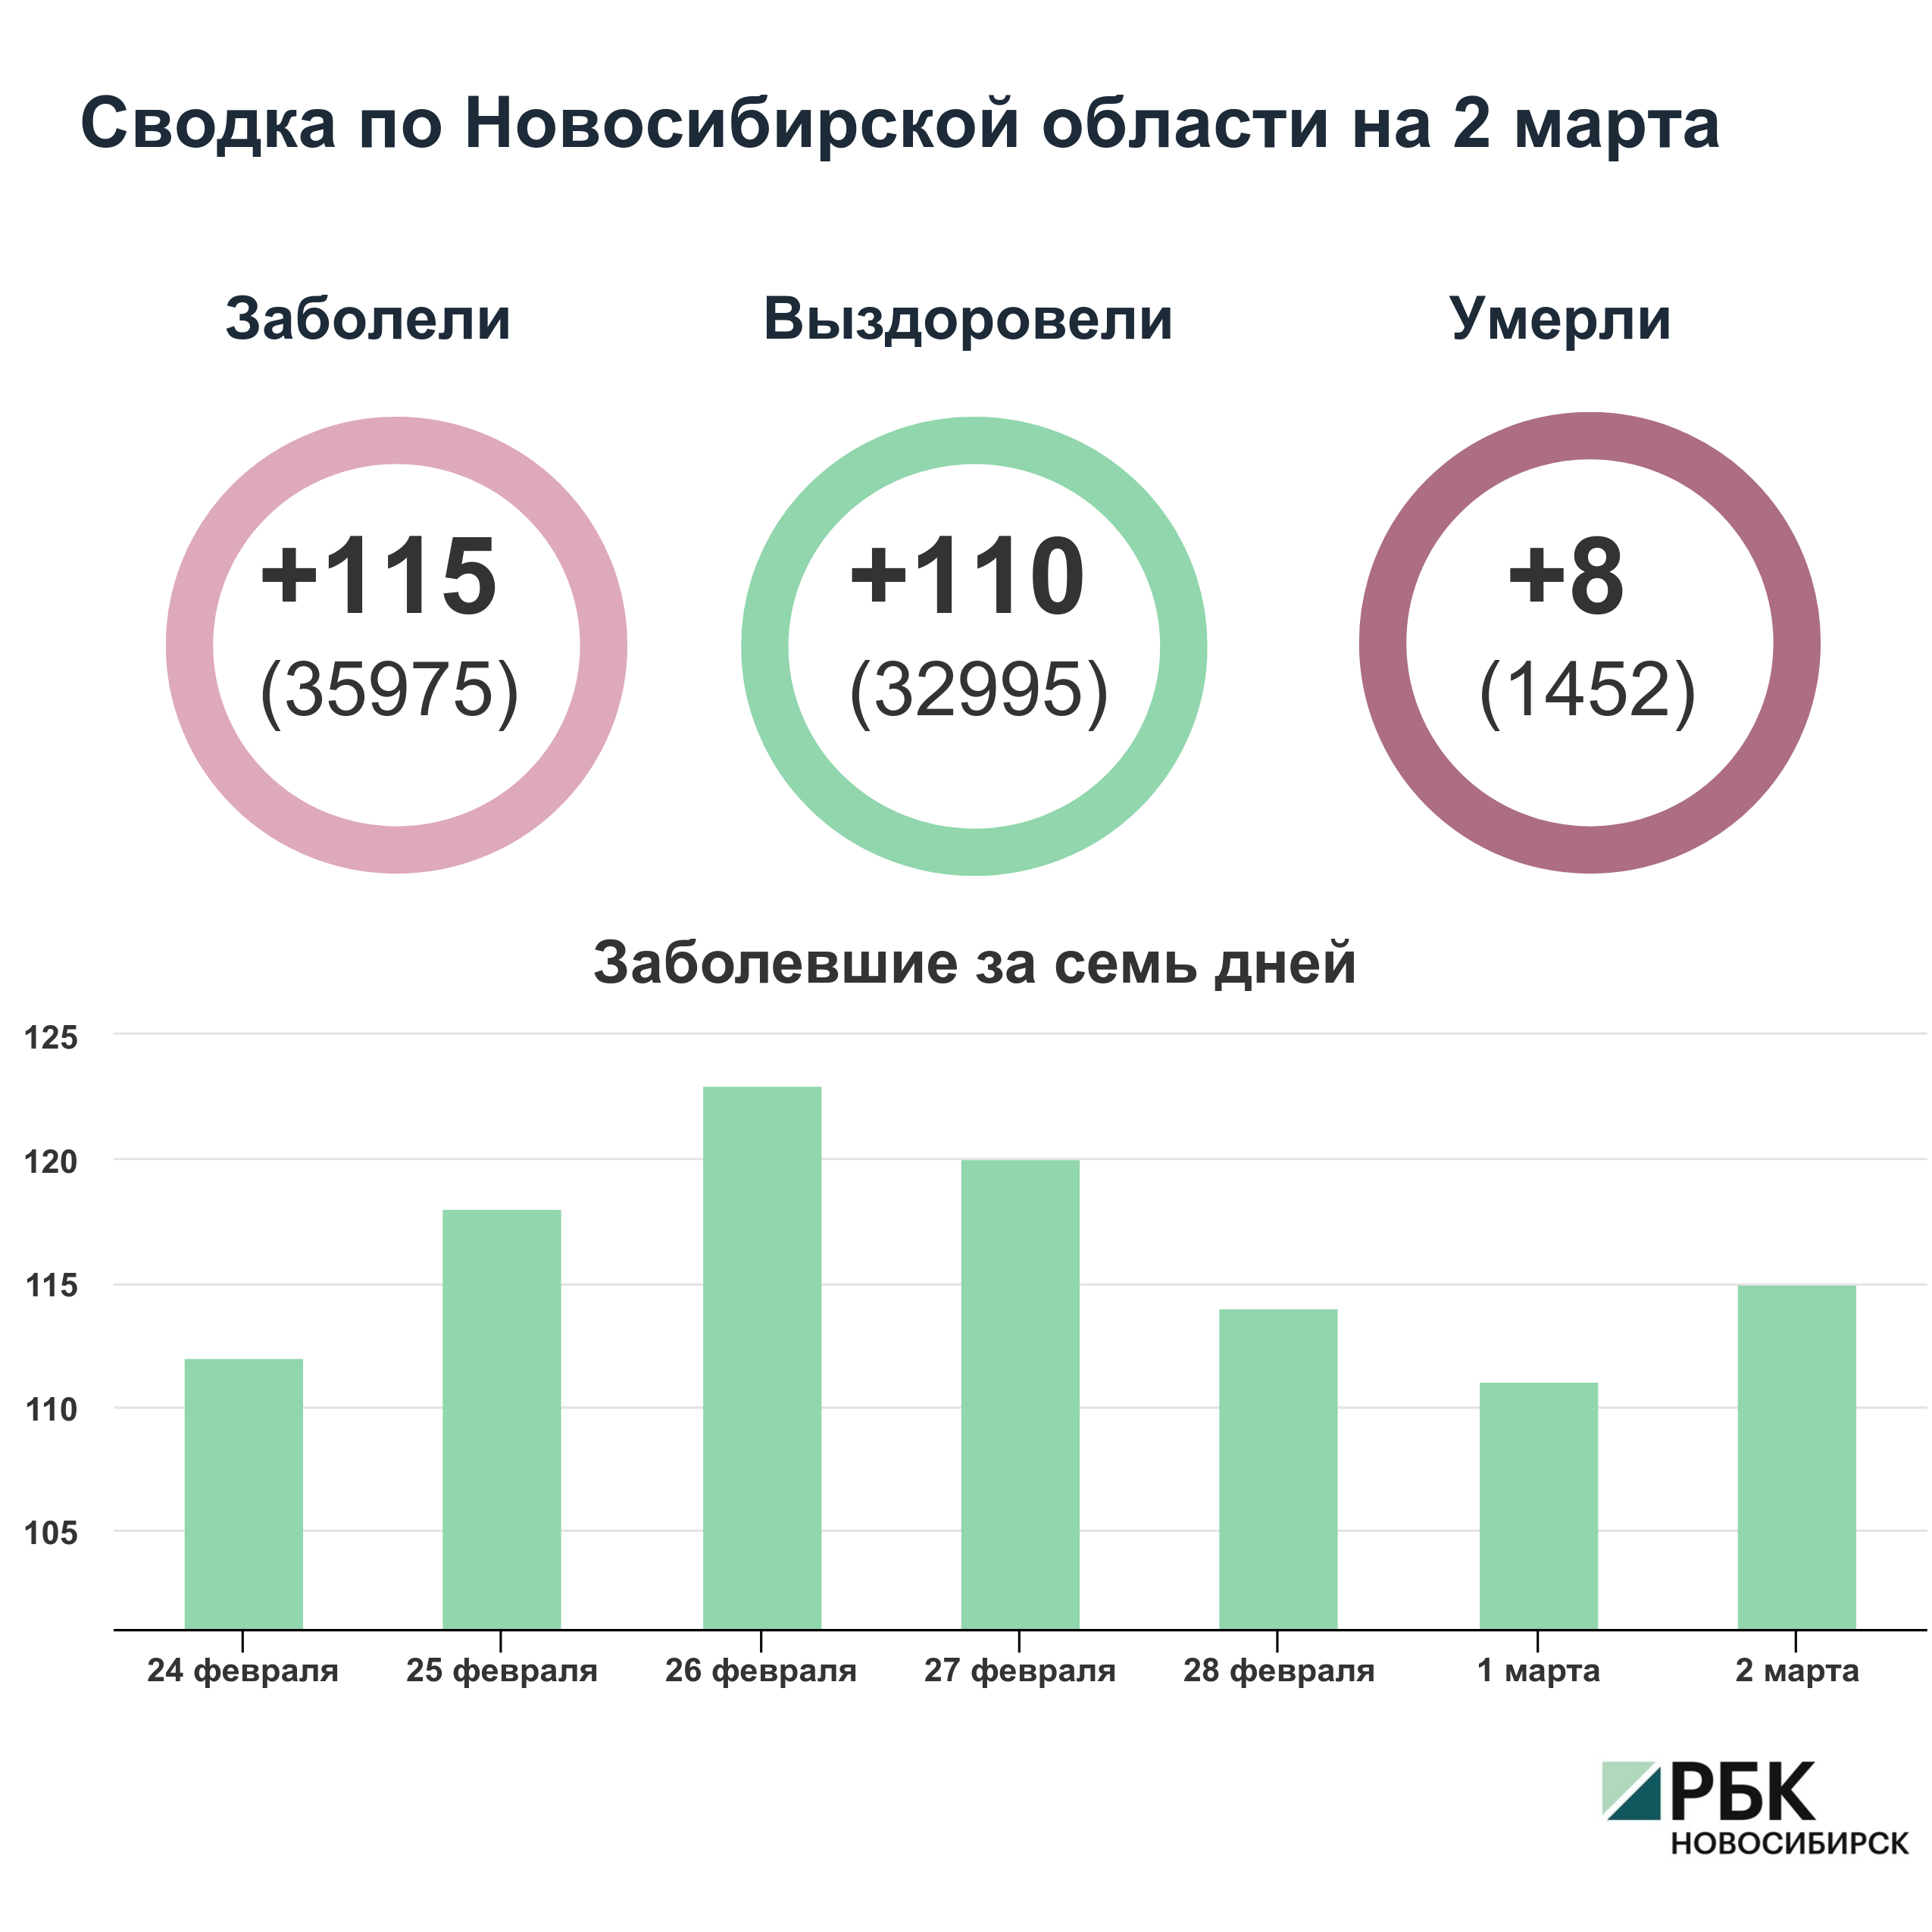 Коронавирус в Новосибирске: сводка на 2 марта